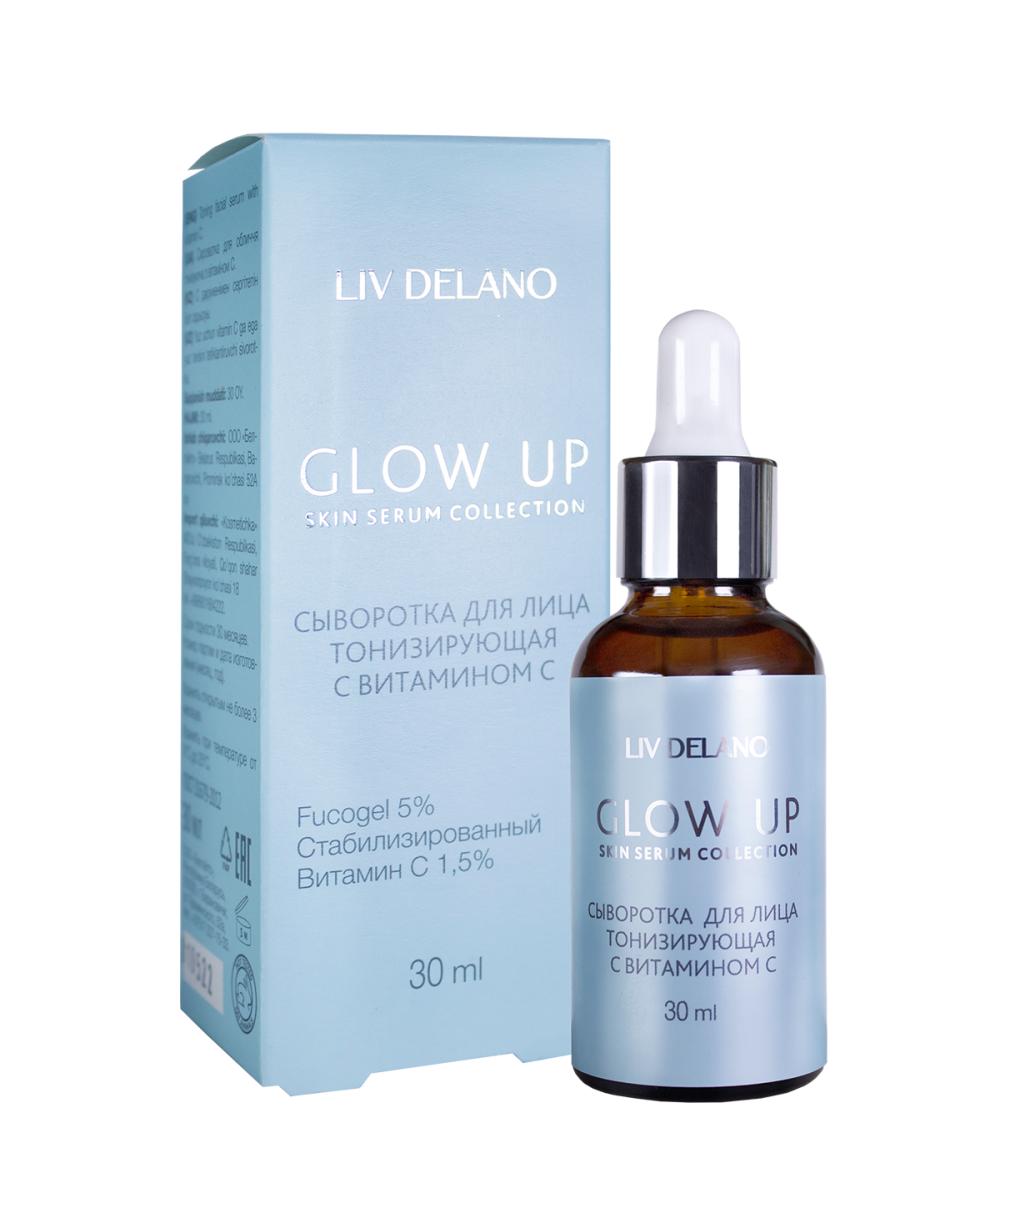 Сыворотка для лица Liv Delano Glow up тонизирующая с витамином С 30 мл., картон